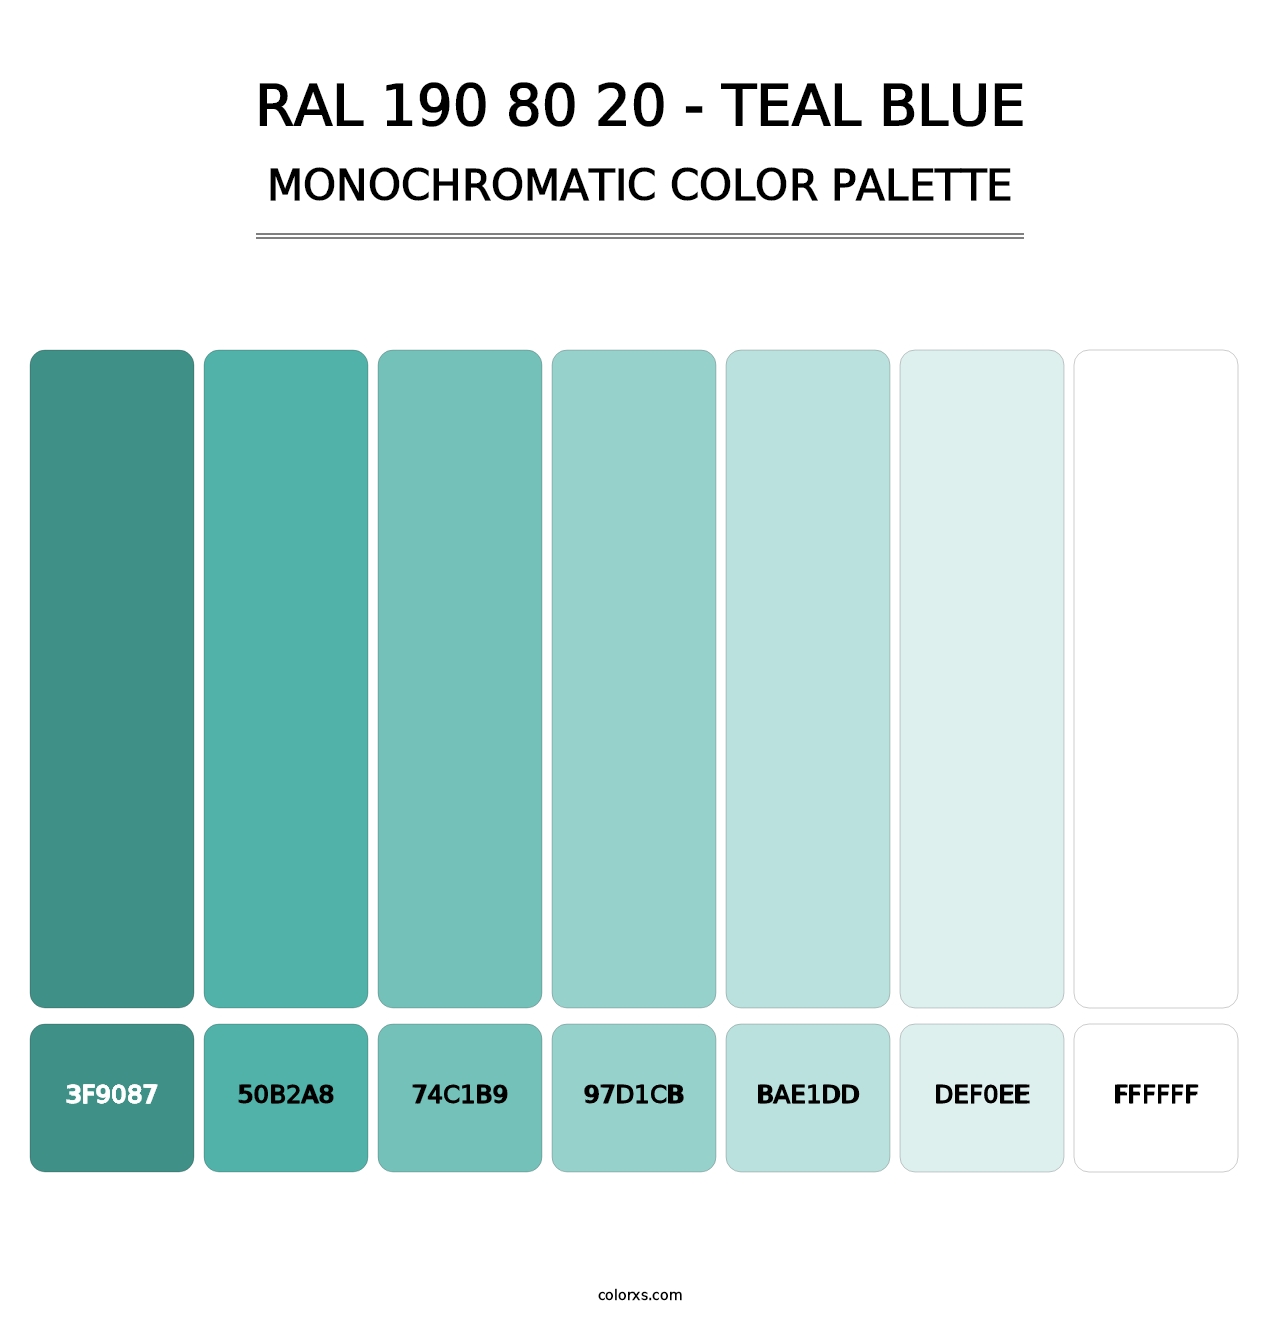 RAL 190 80 20 - Teal Blue - Monochromatic Color Palette